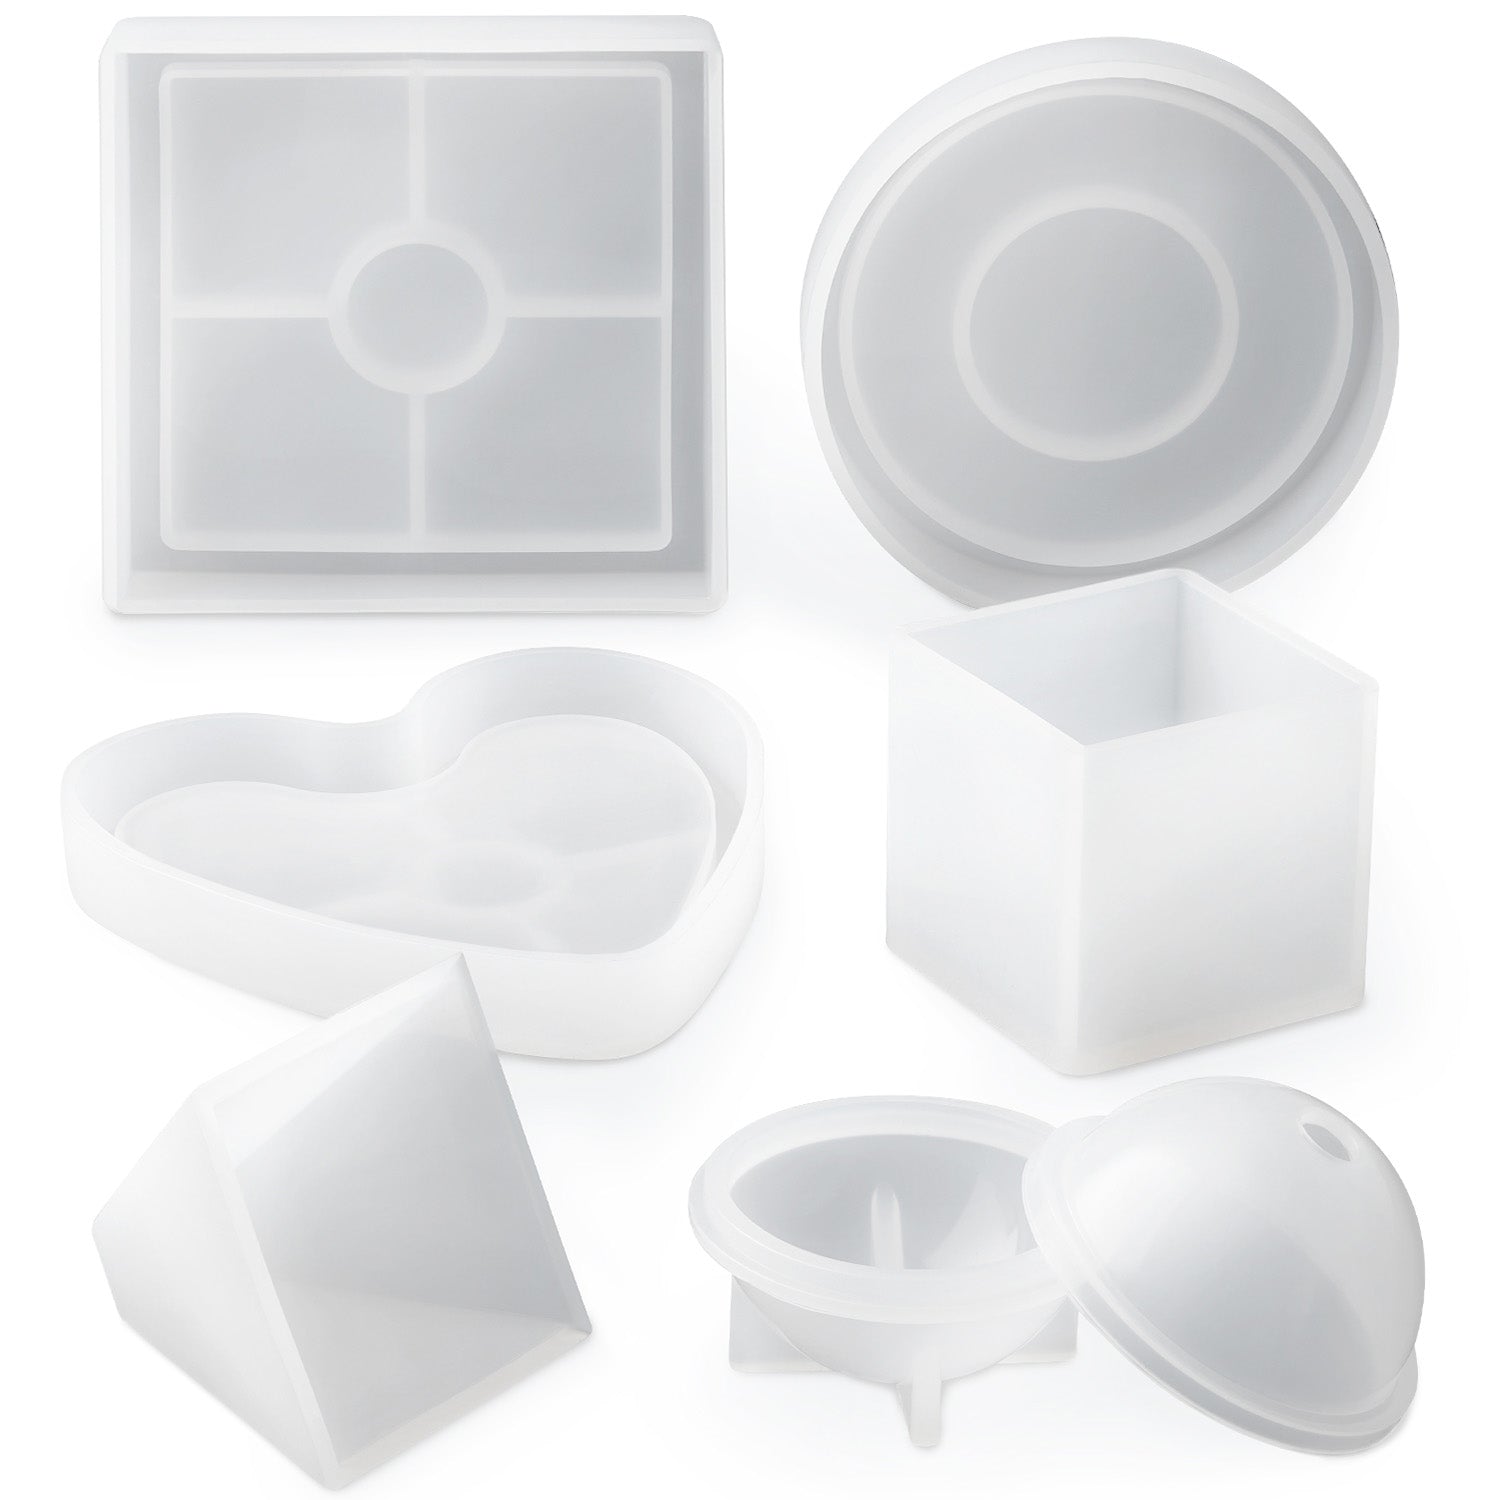 TINYSOME Resin Casting Silicone Mold Kit Geometric Shape Design